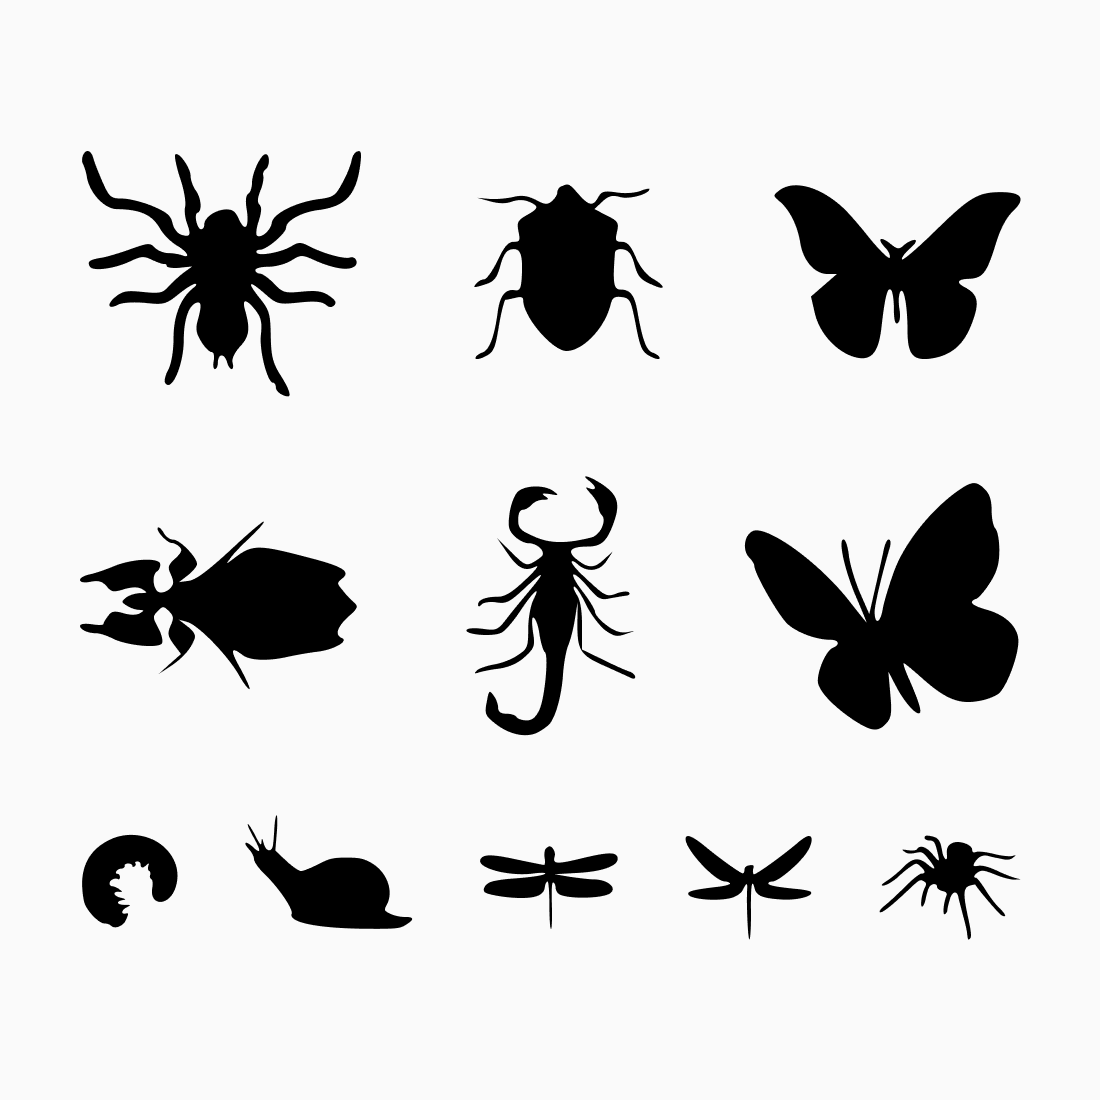 Insects v2 SVG bundle.